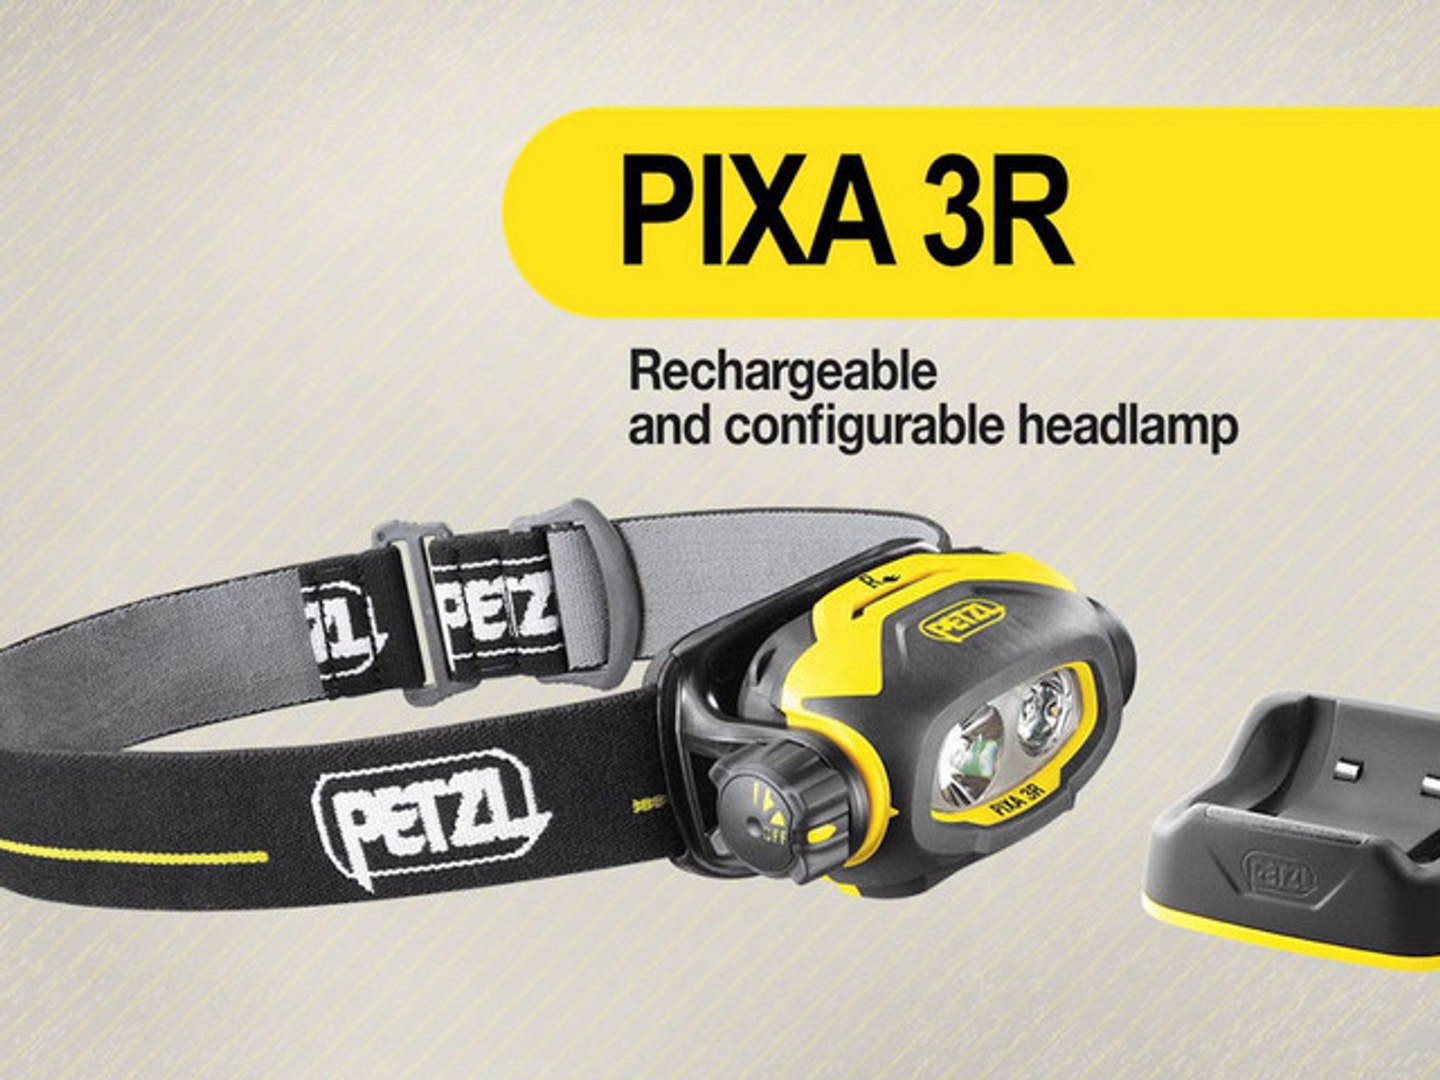 PIXA 3R - [EN] Petzl rechargeable and configurable headlamp - Vidéo  Dailymotion